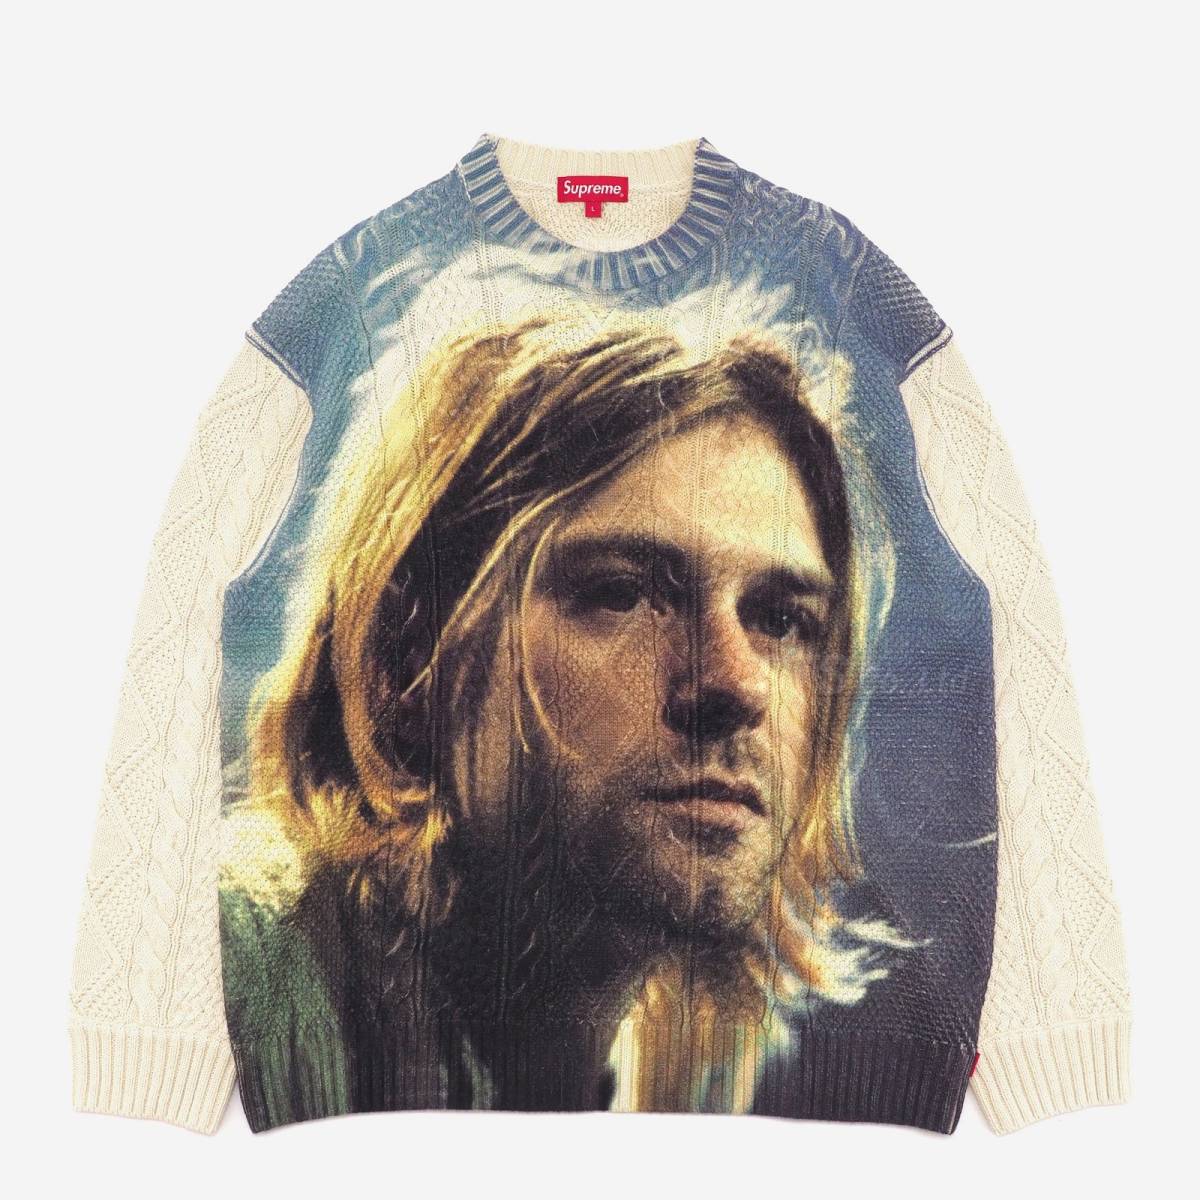 Supreme - Kurt Cobain Sweater 白L シュプリーム - カート コバーン セーター 2023SS_画像1